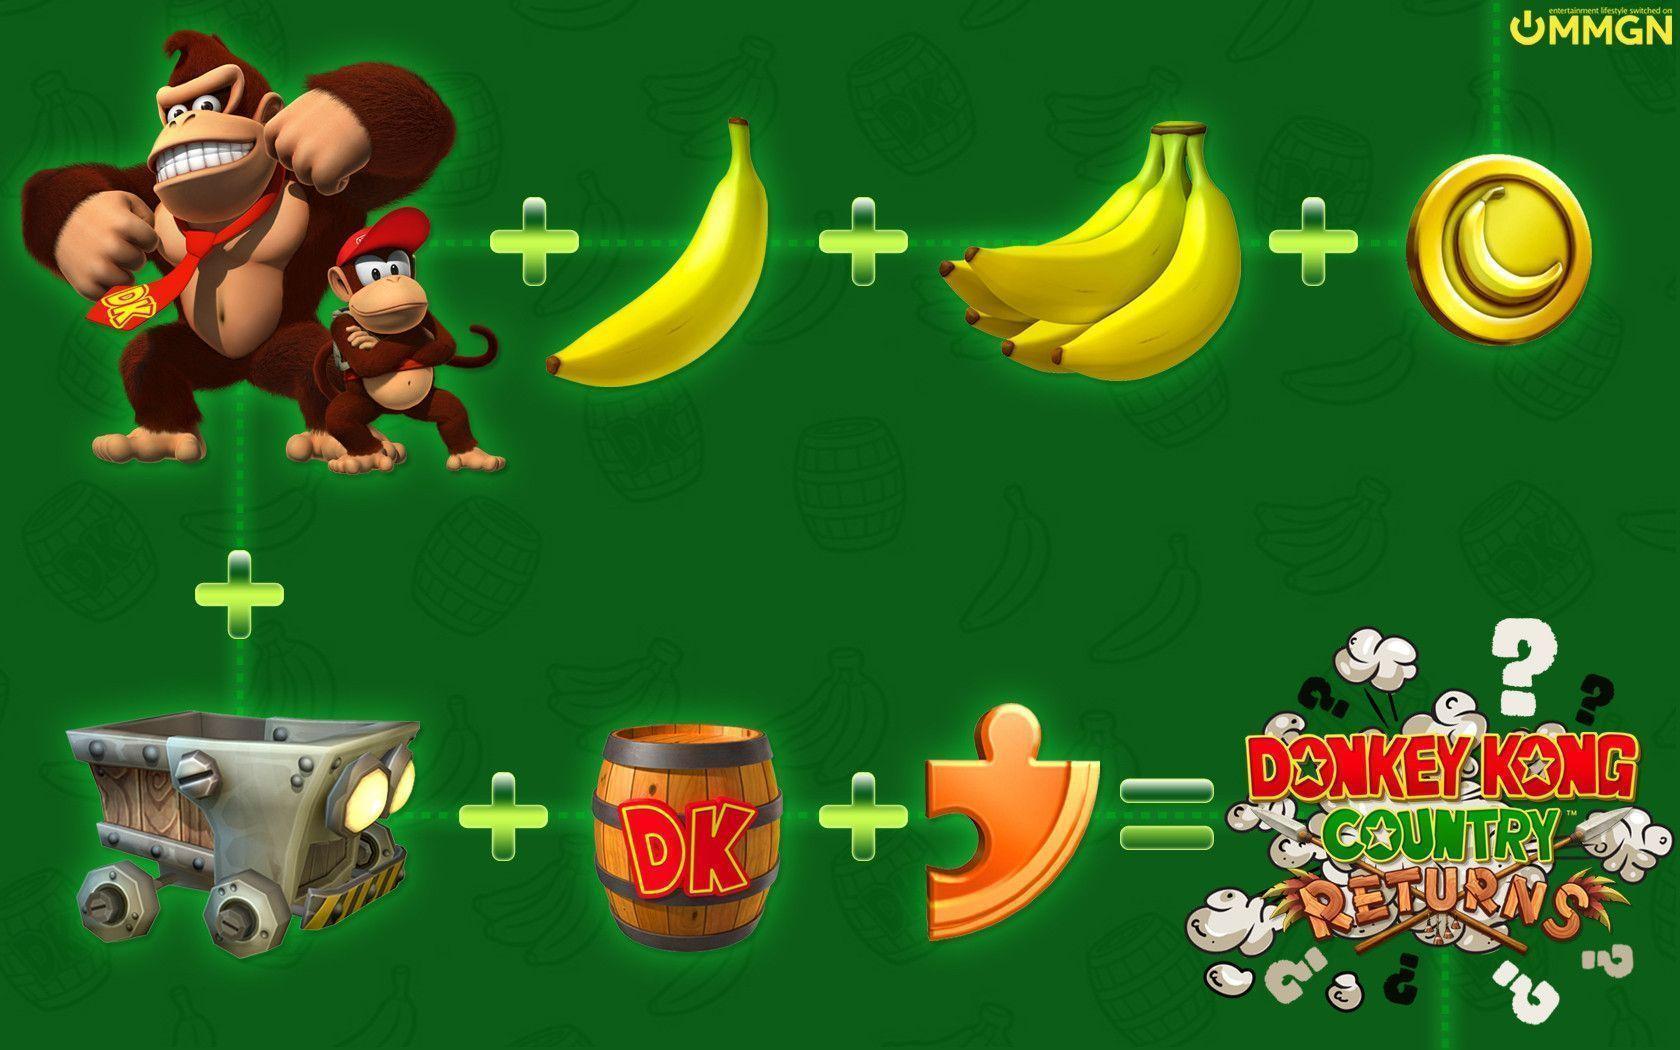 Donkey Kong Wallpaper 4k For Laptop, Donkey Kong, Game